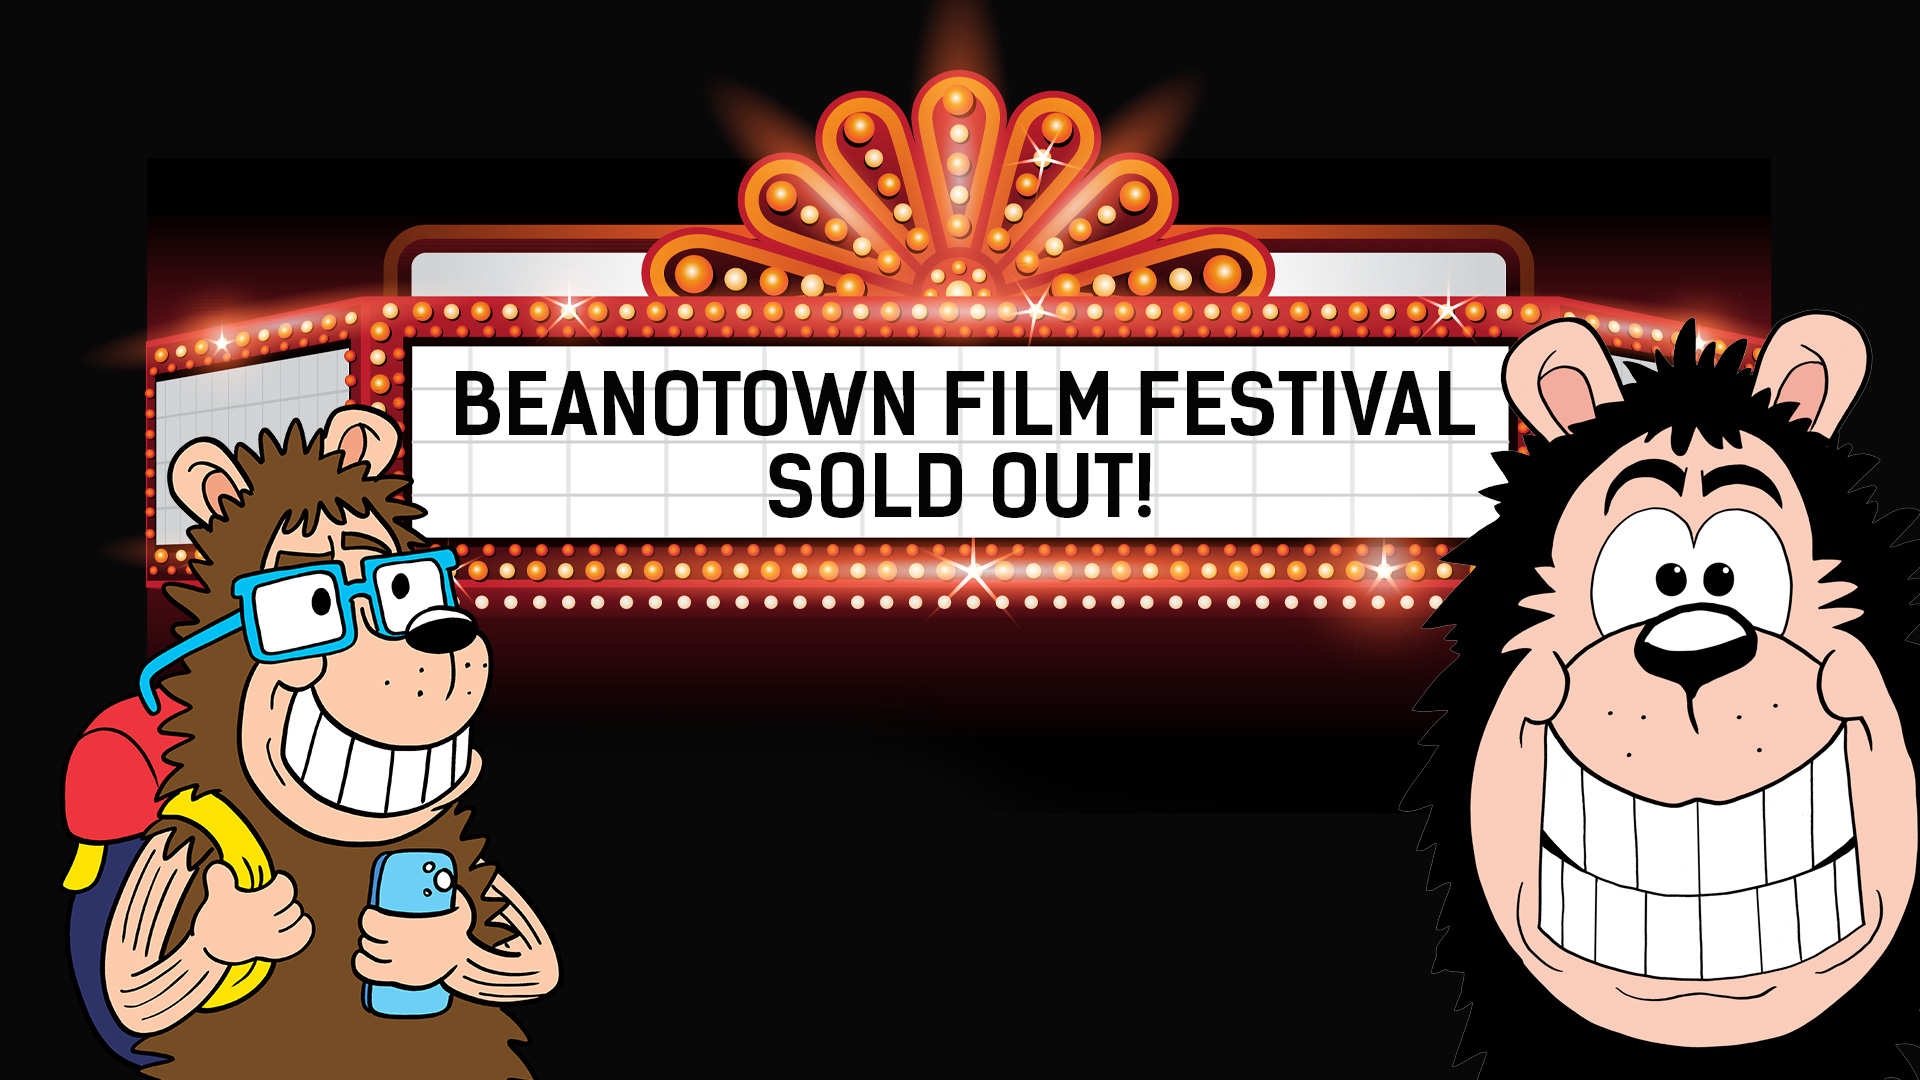 A sign for Beanotown Film Festival